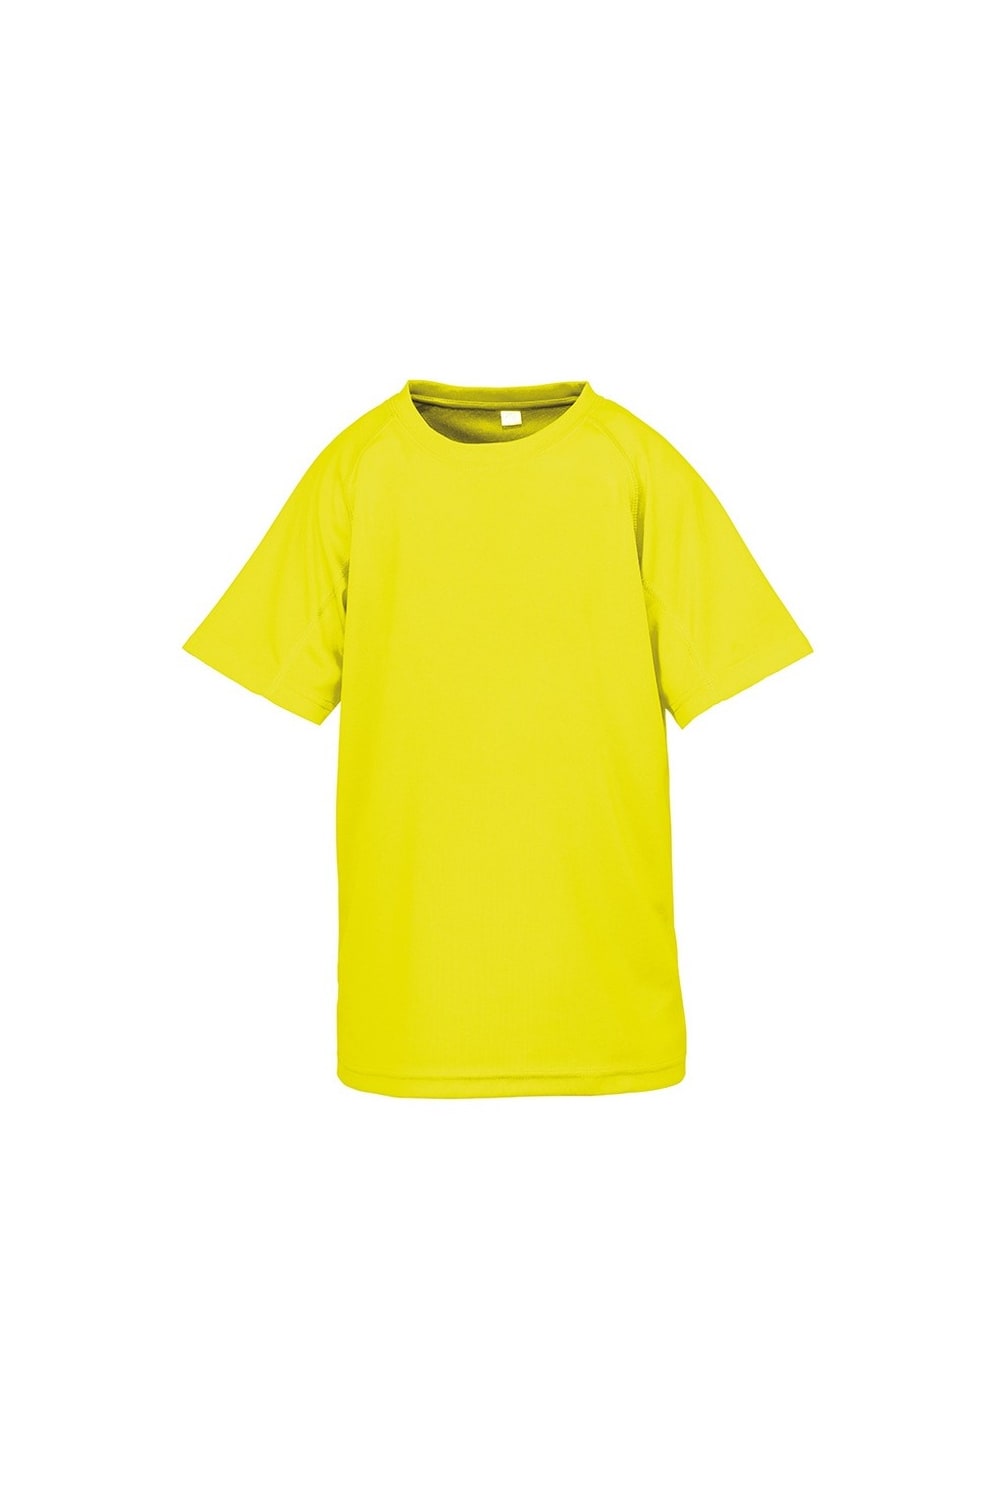 Spiro Chidlrens/Kids Impact Performance Aircool T-Shirt (Flo Yellow)